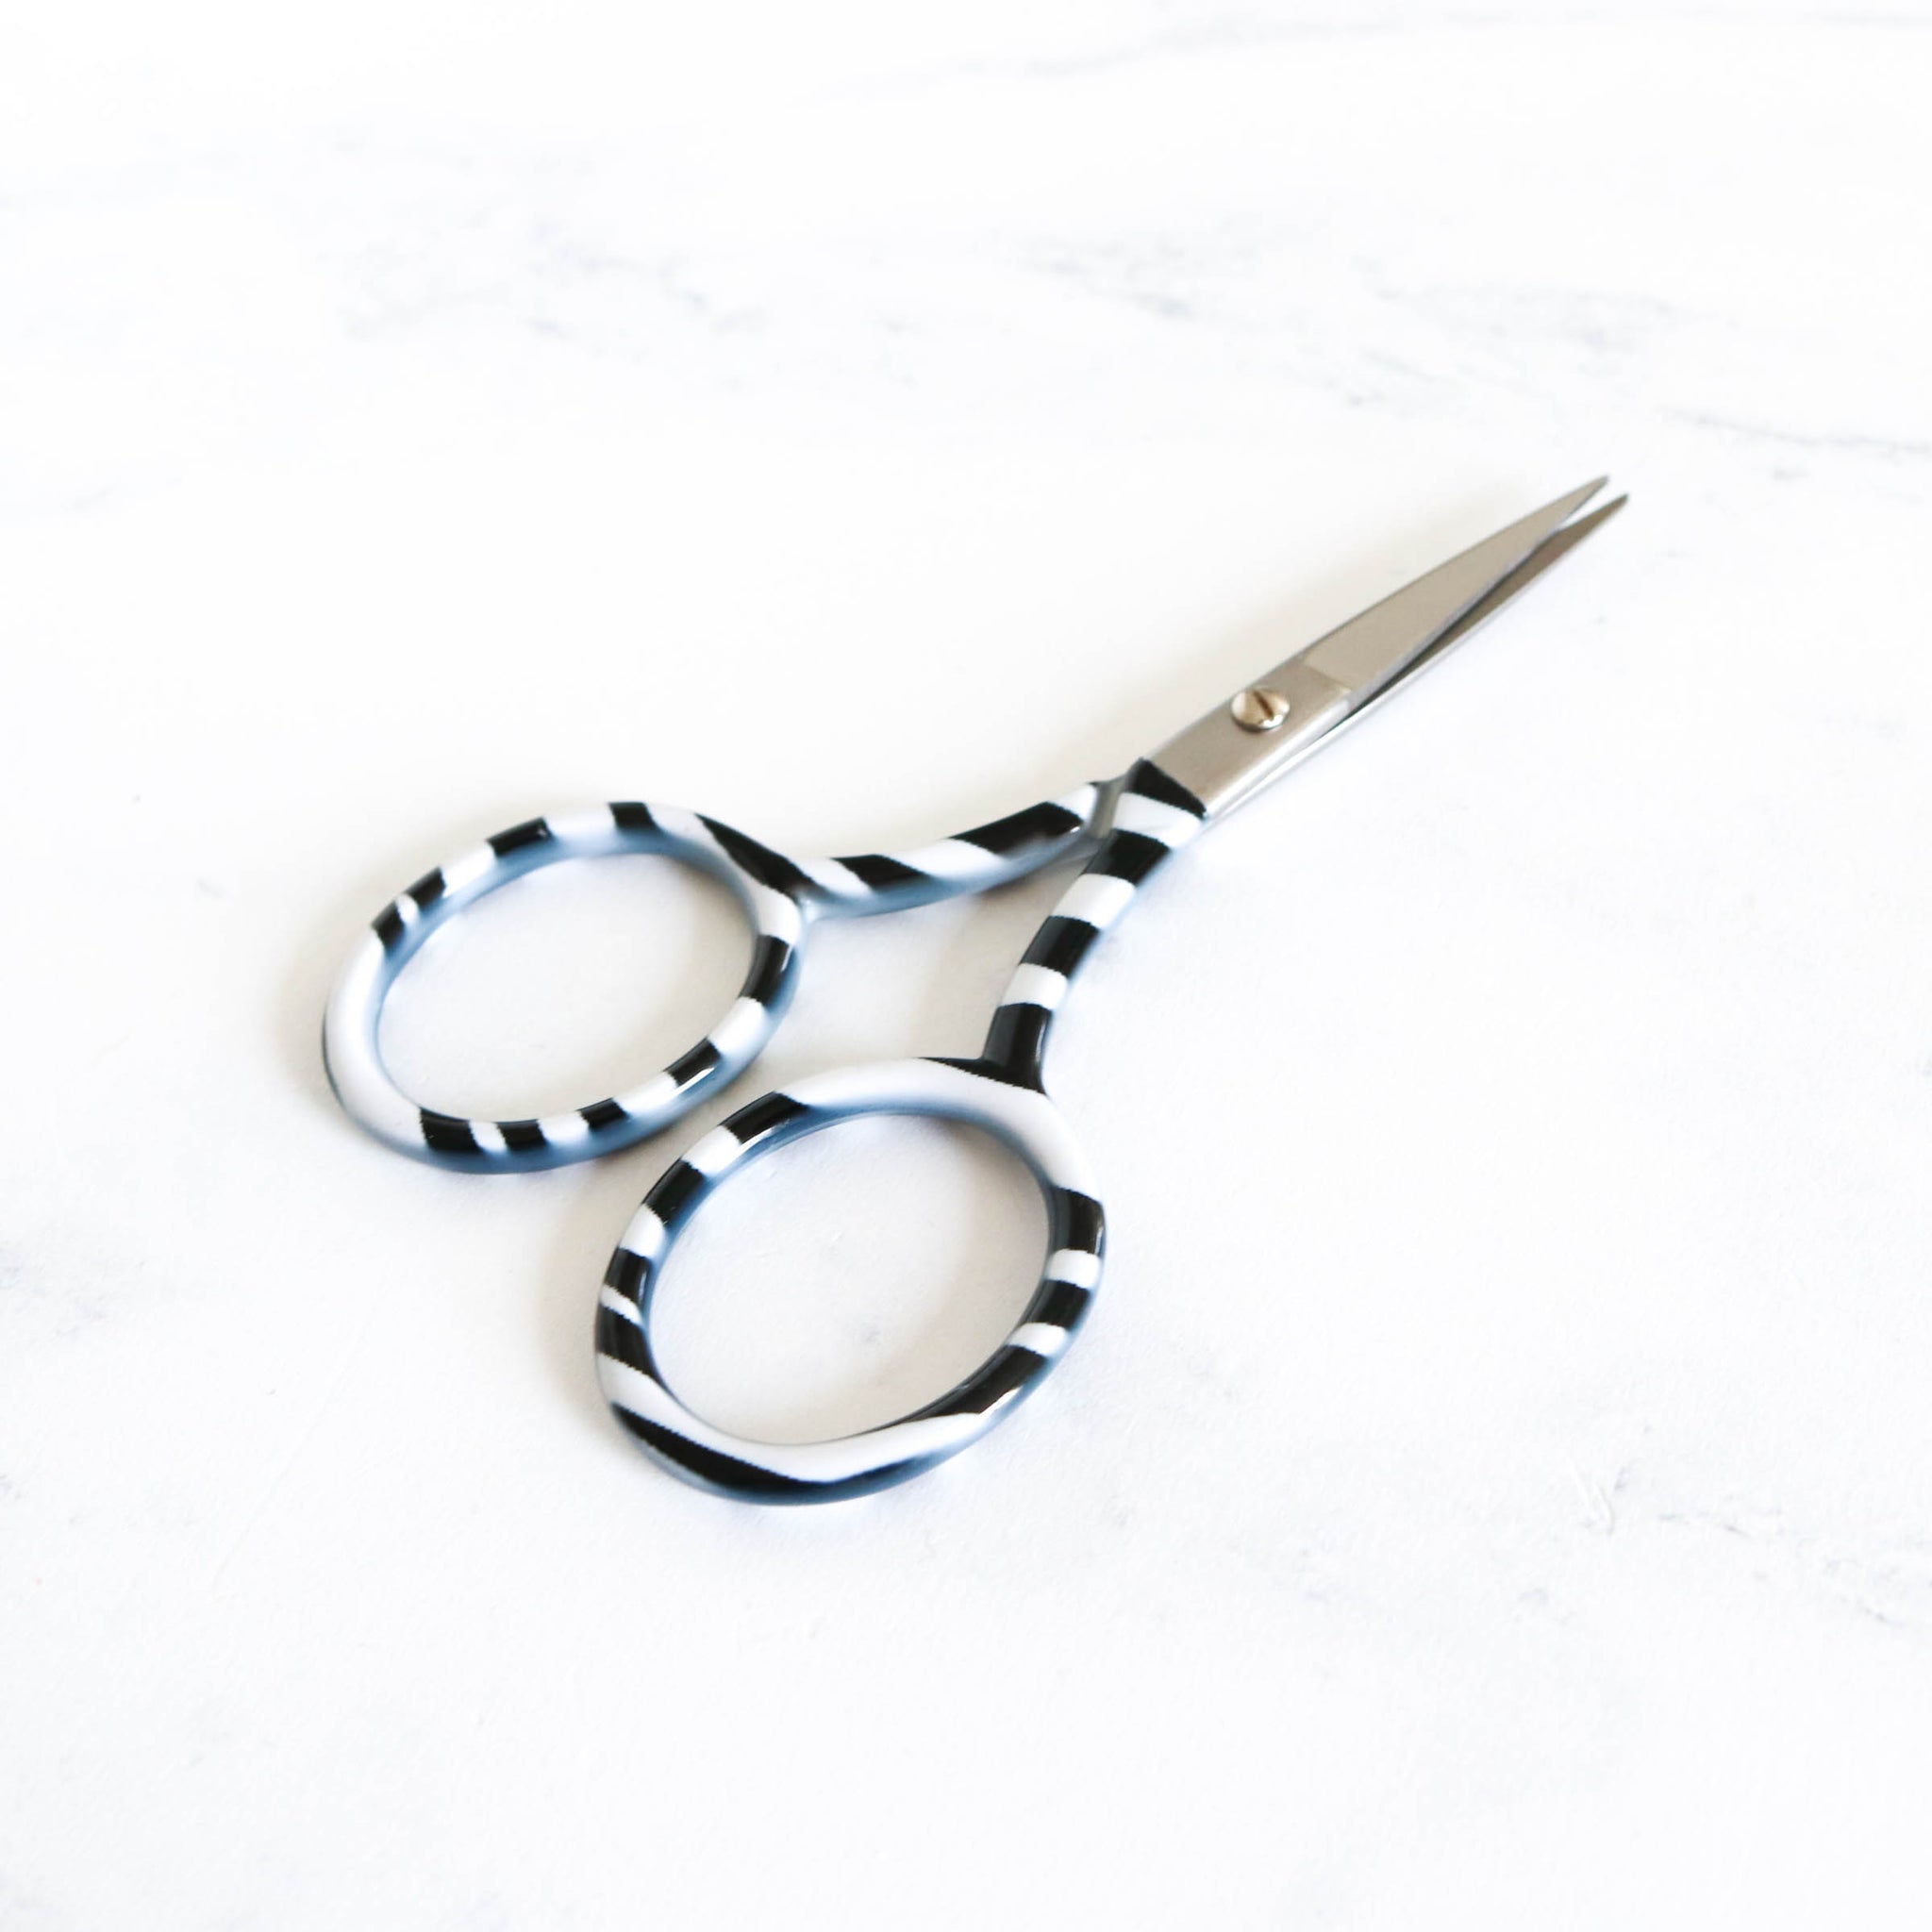 Patterned Embroidery Scissors - Zebra Black + White - Stitched Modern